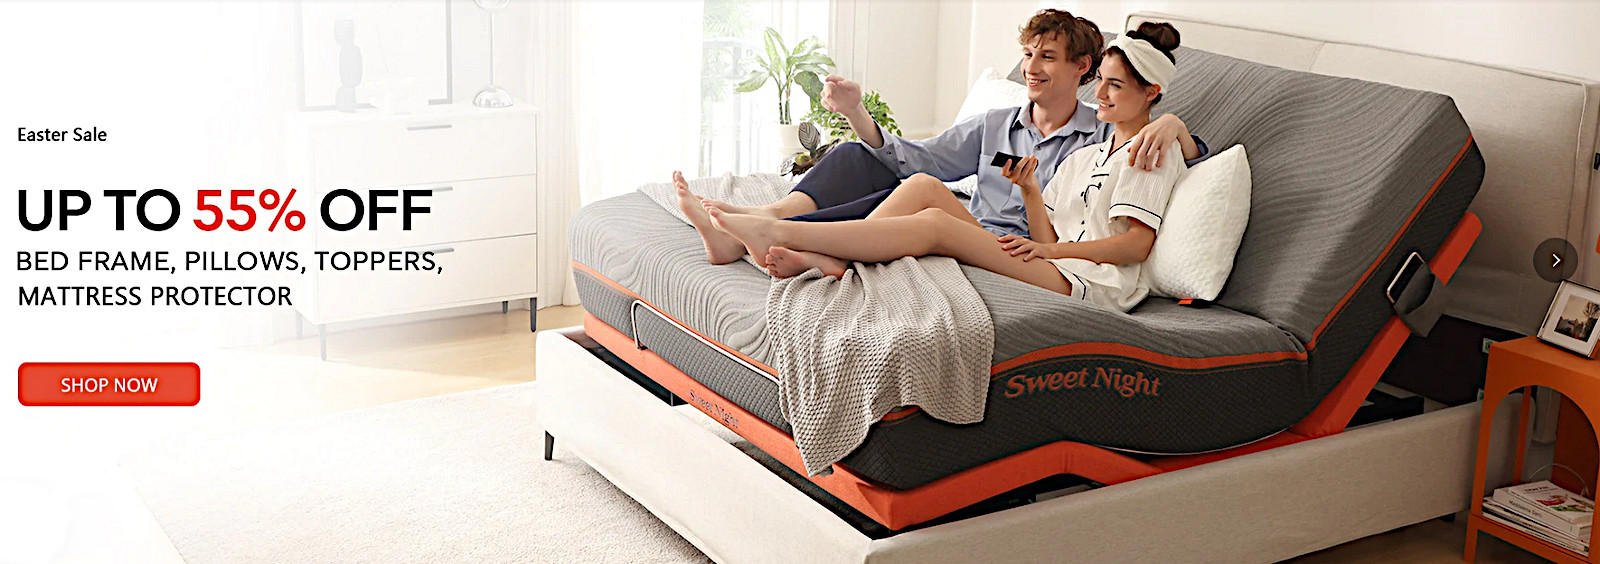 Discount bed frame pillow topper mattress protector